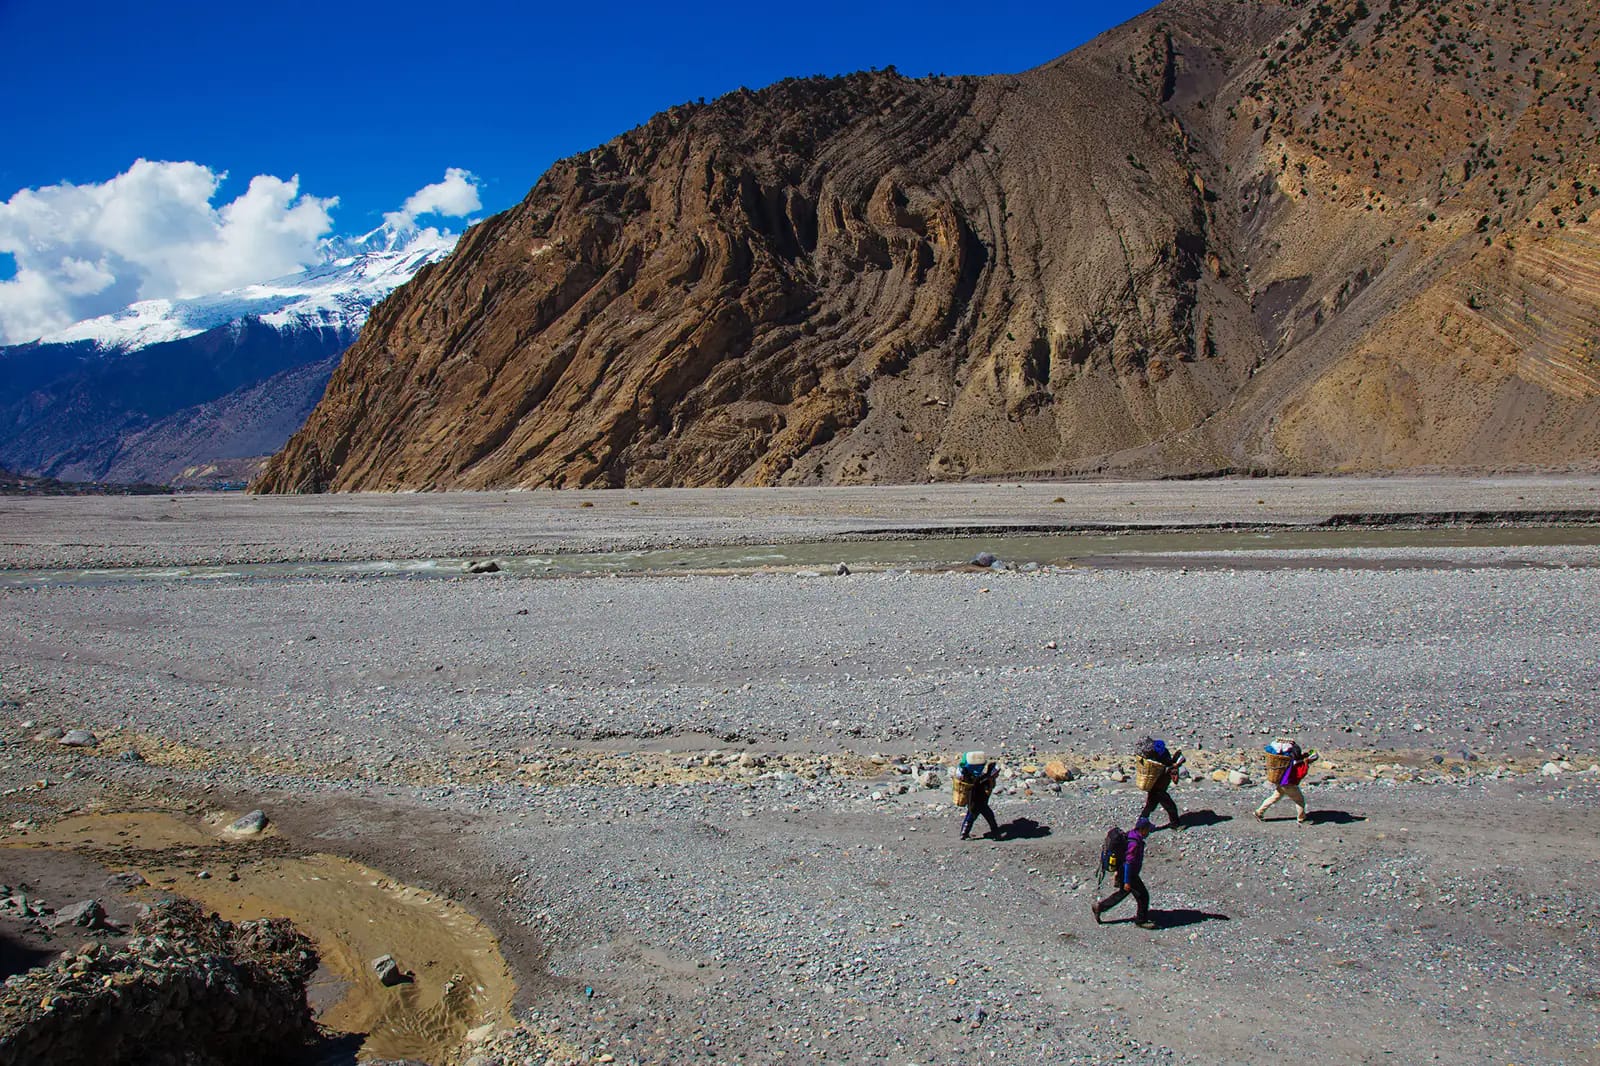 Dramatic landscape in the Kali Gandaki Gorge